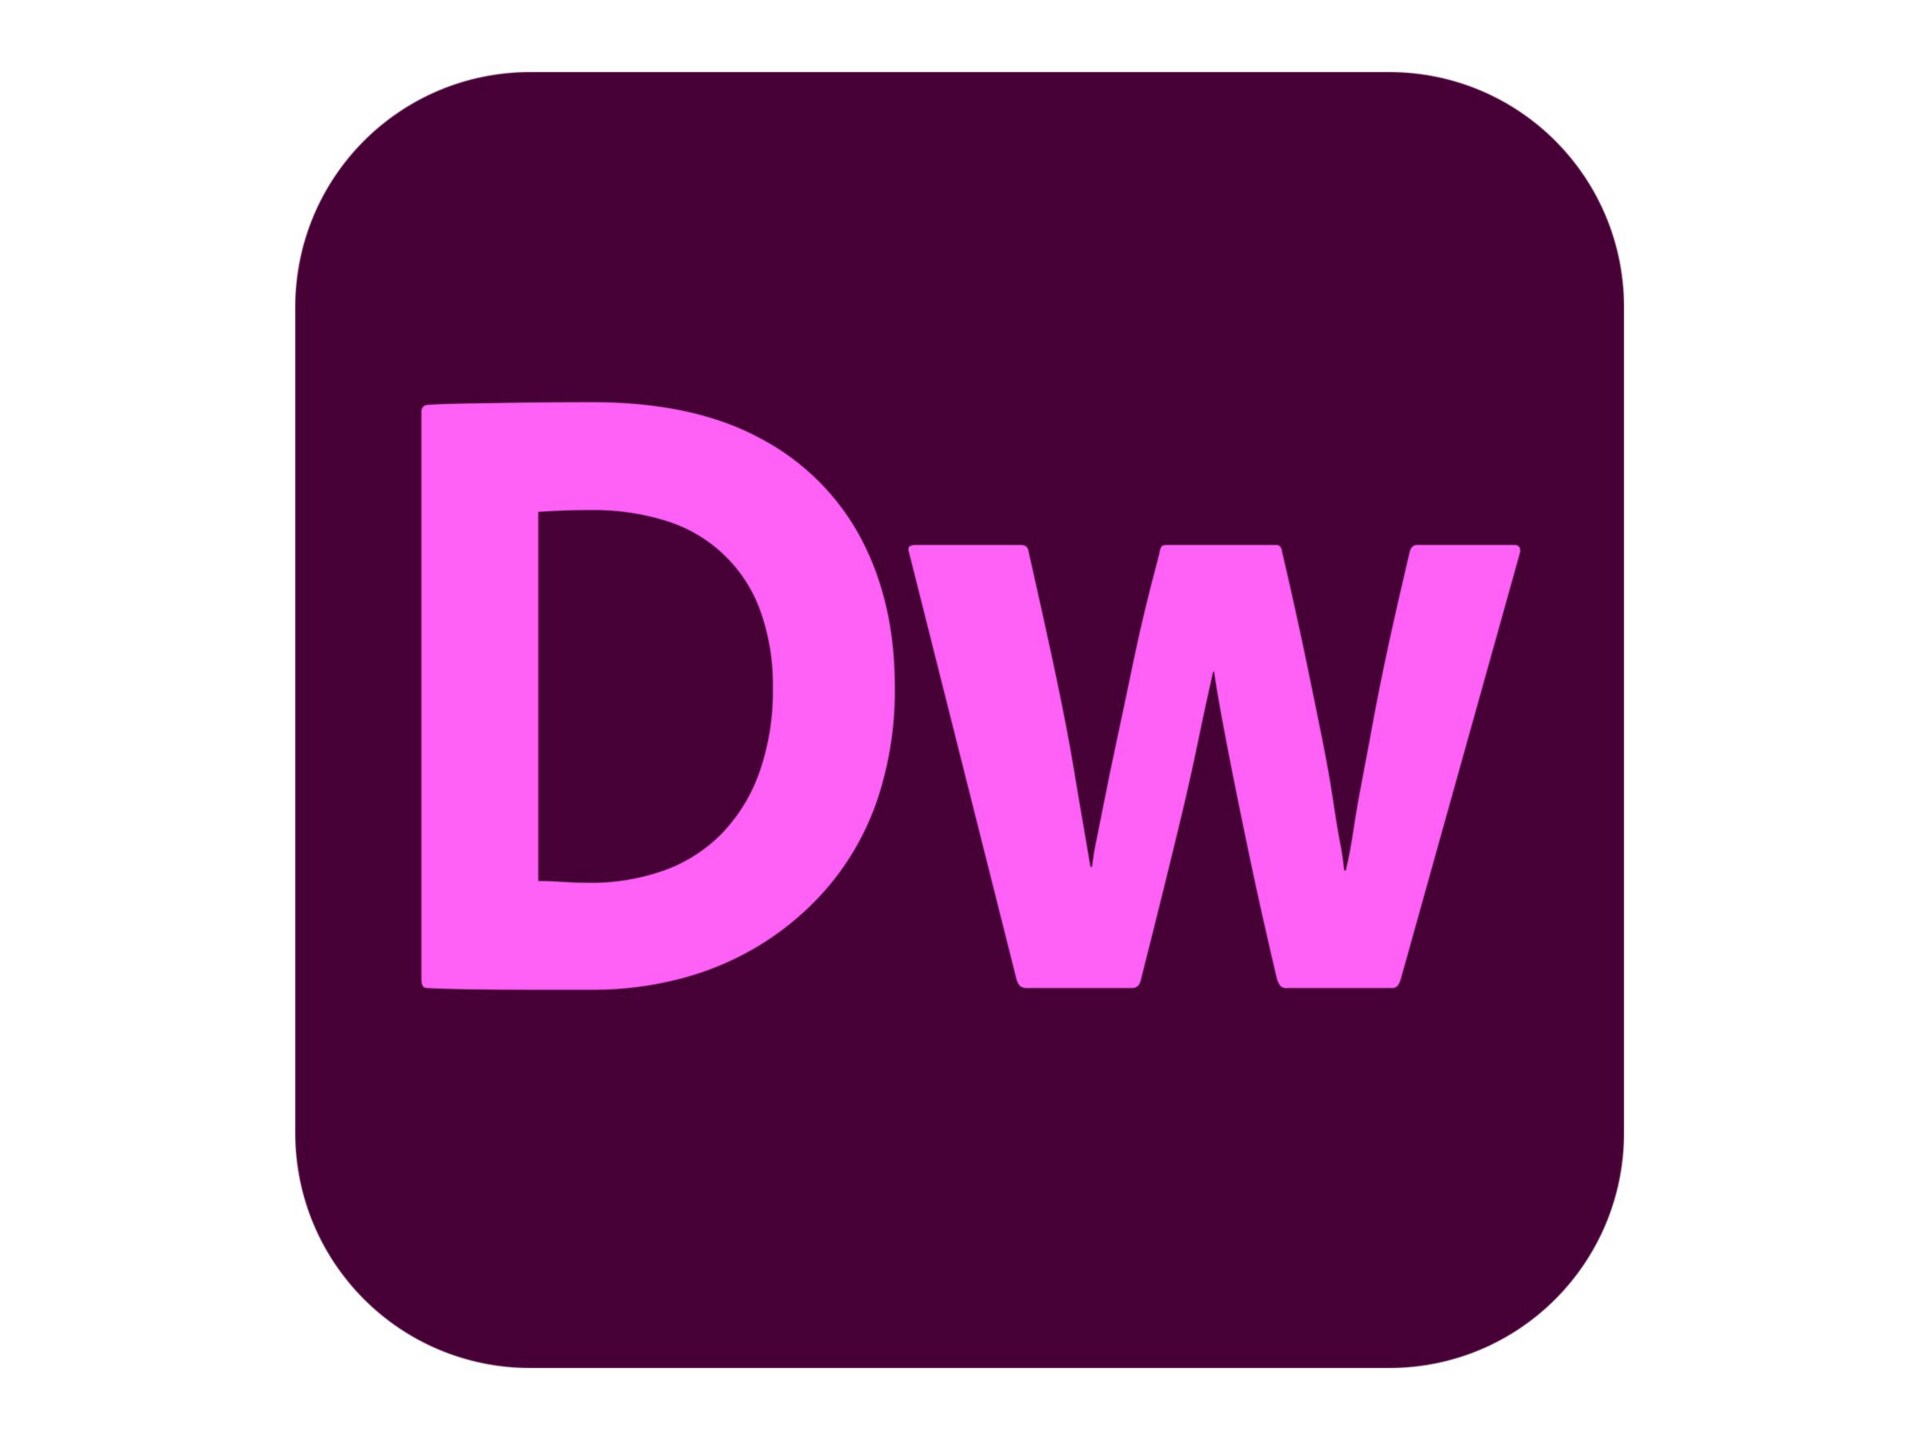 Adobe Dreamweaver CC - Team Licensing Subscription New (7 months) - 1 user